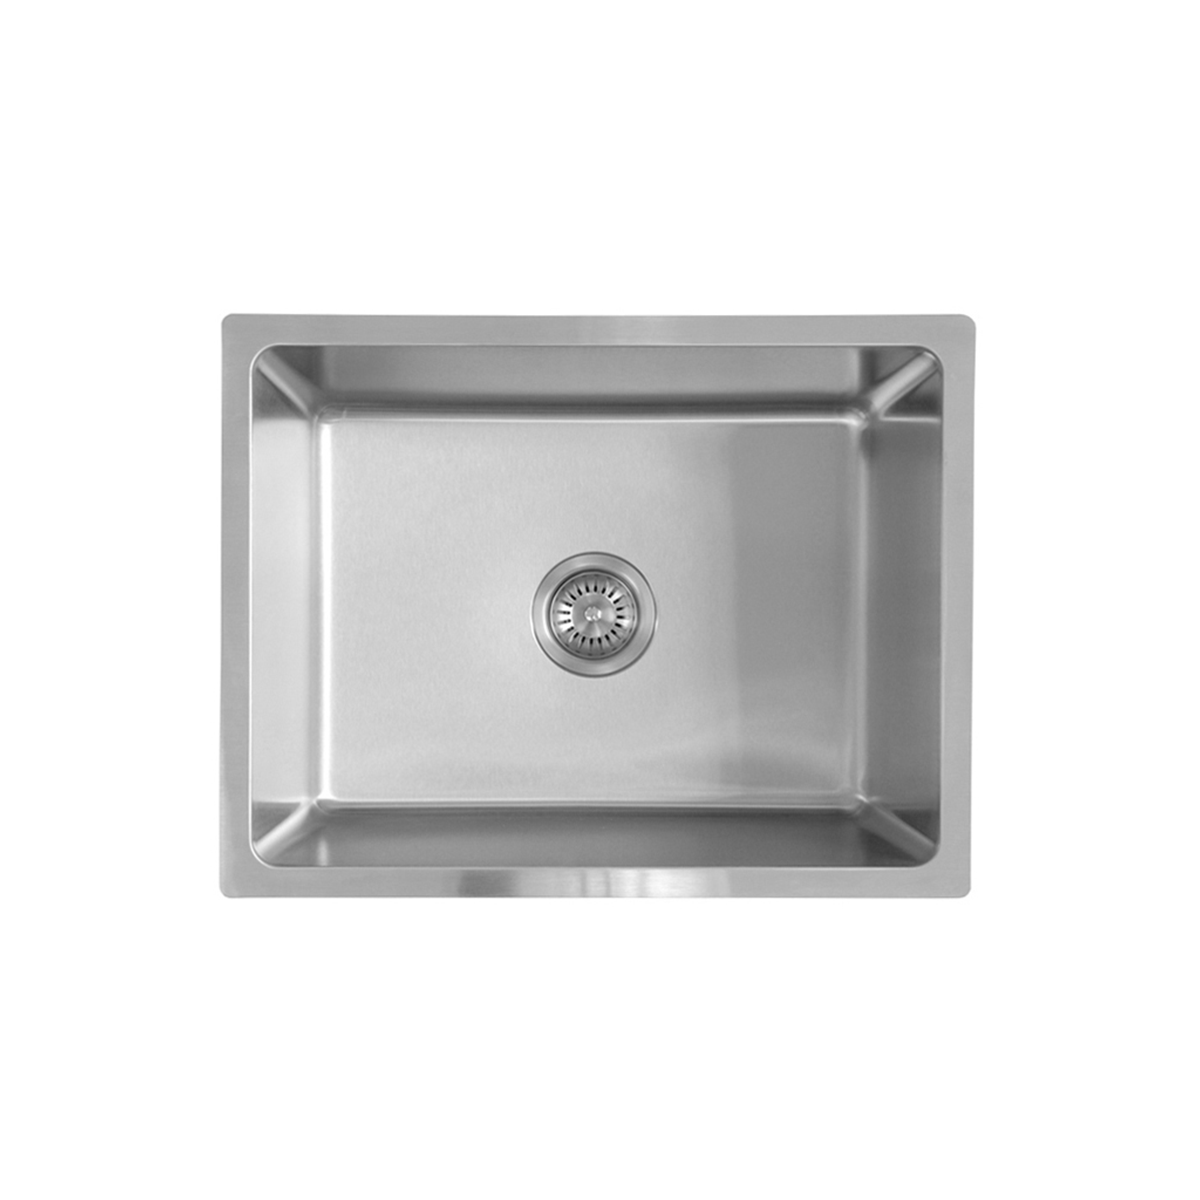 Pelican Int'l Urban Series PL-VR2318 R20 18 Gauge Stainless Steel Undermount Kitchen Sink 23" x 18" with Low Radius Corners